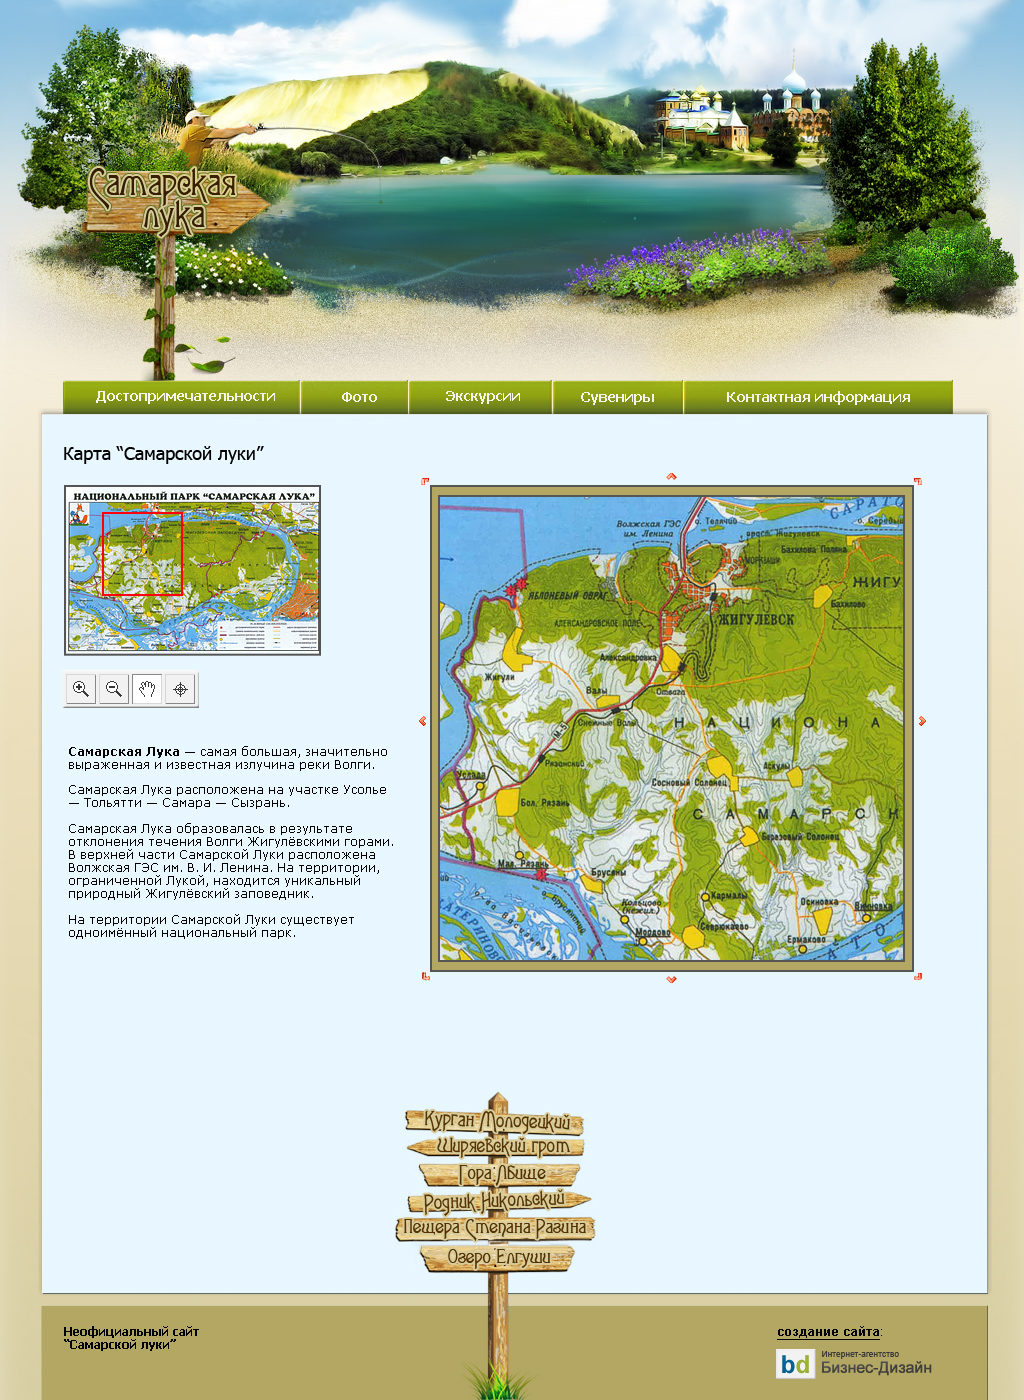 Дизайн сайта для Самарской луки